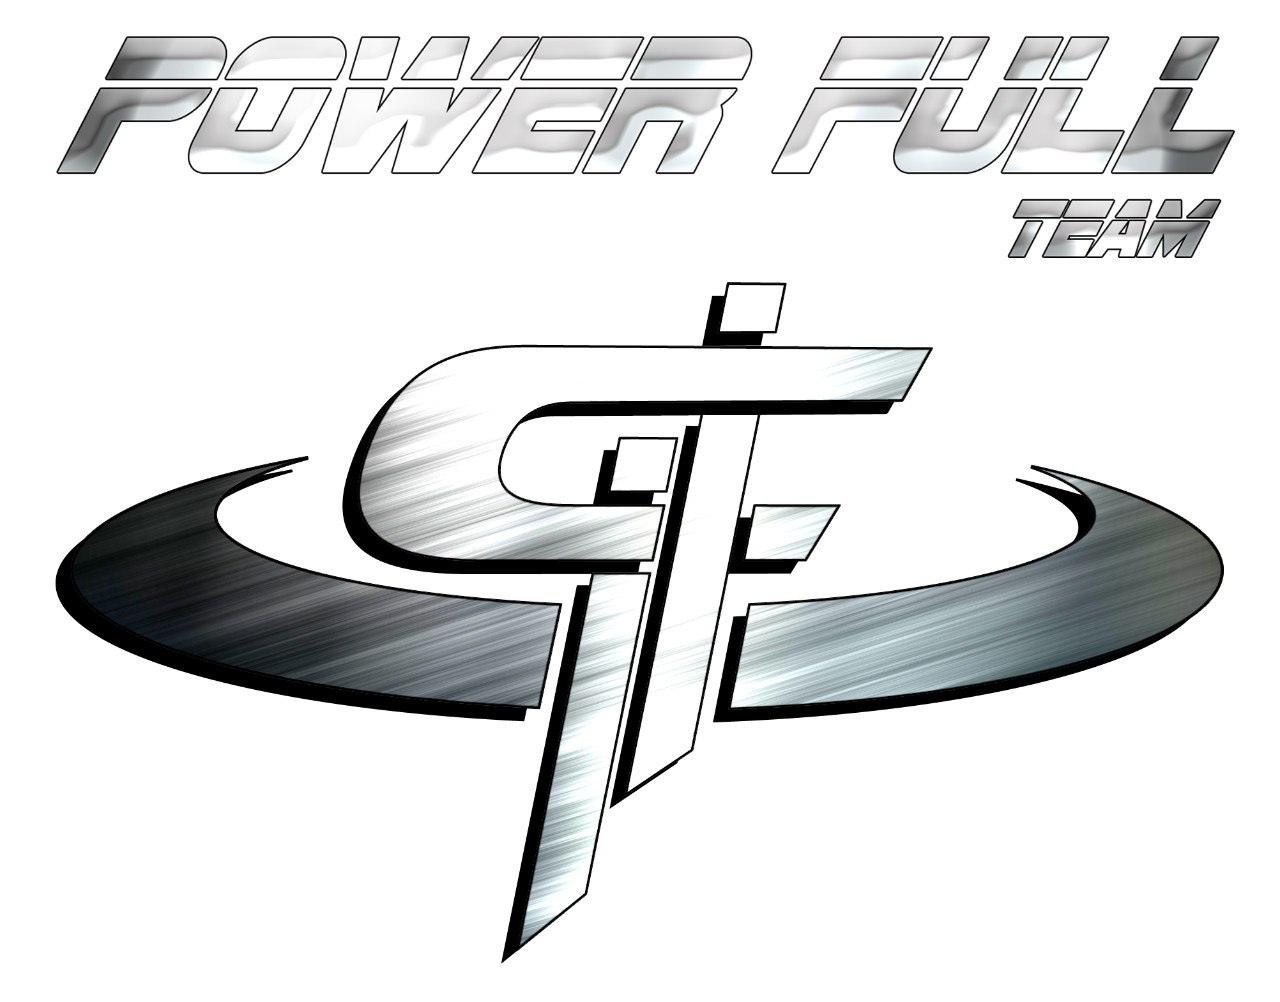 PFTEAM|Power Full